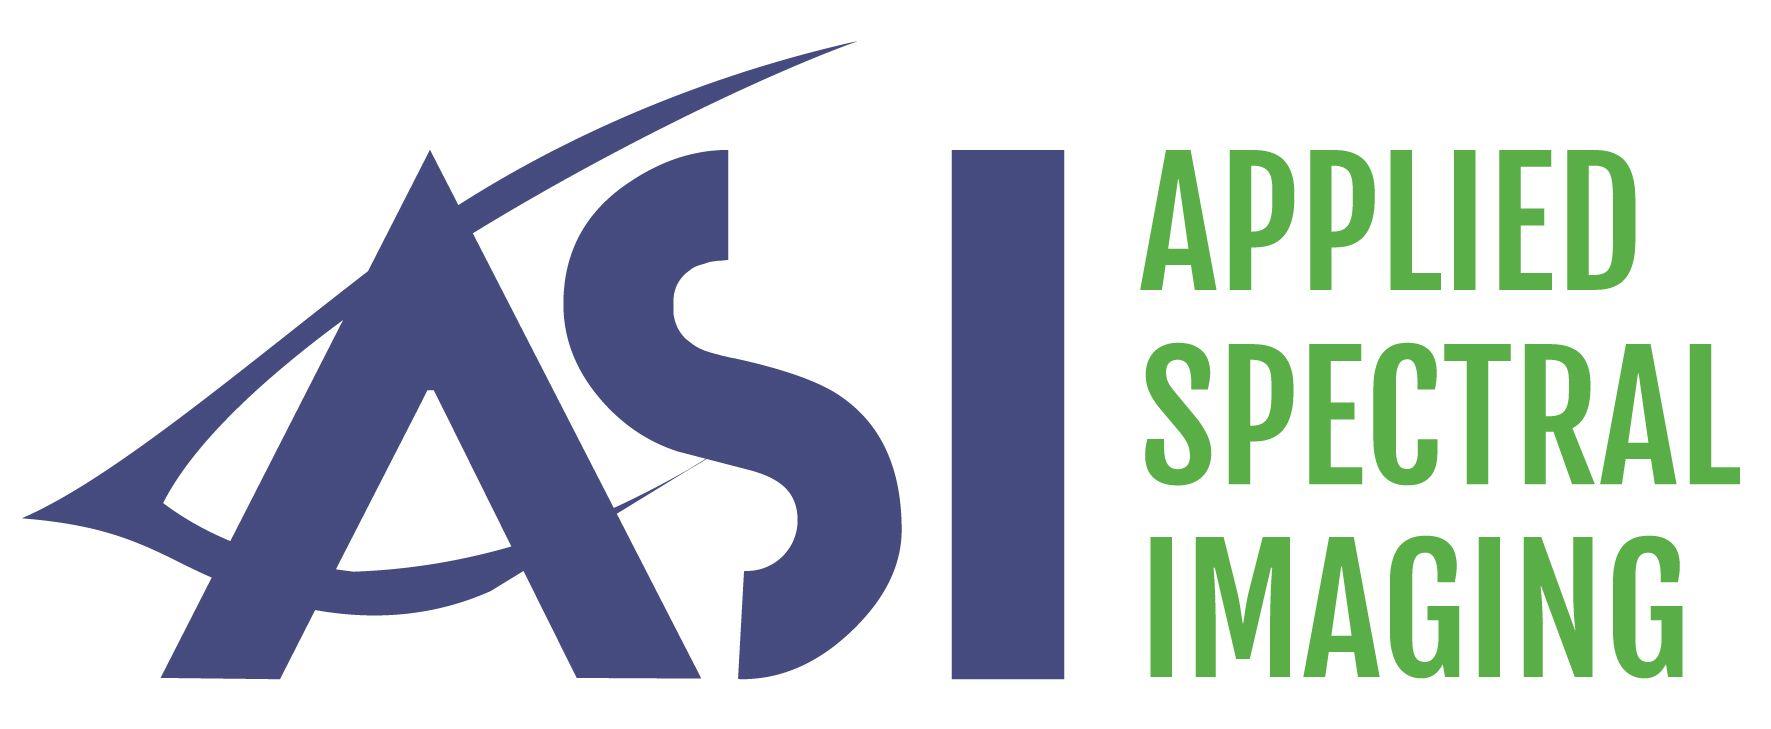 Asi Logo - File:ASI logo 2017.jpg - Wikimedia Commons